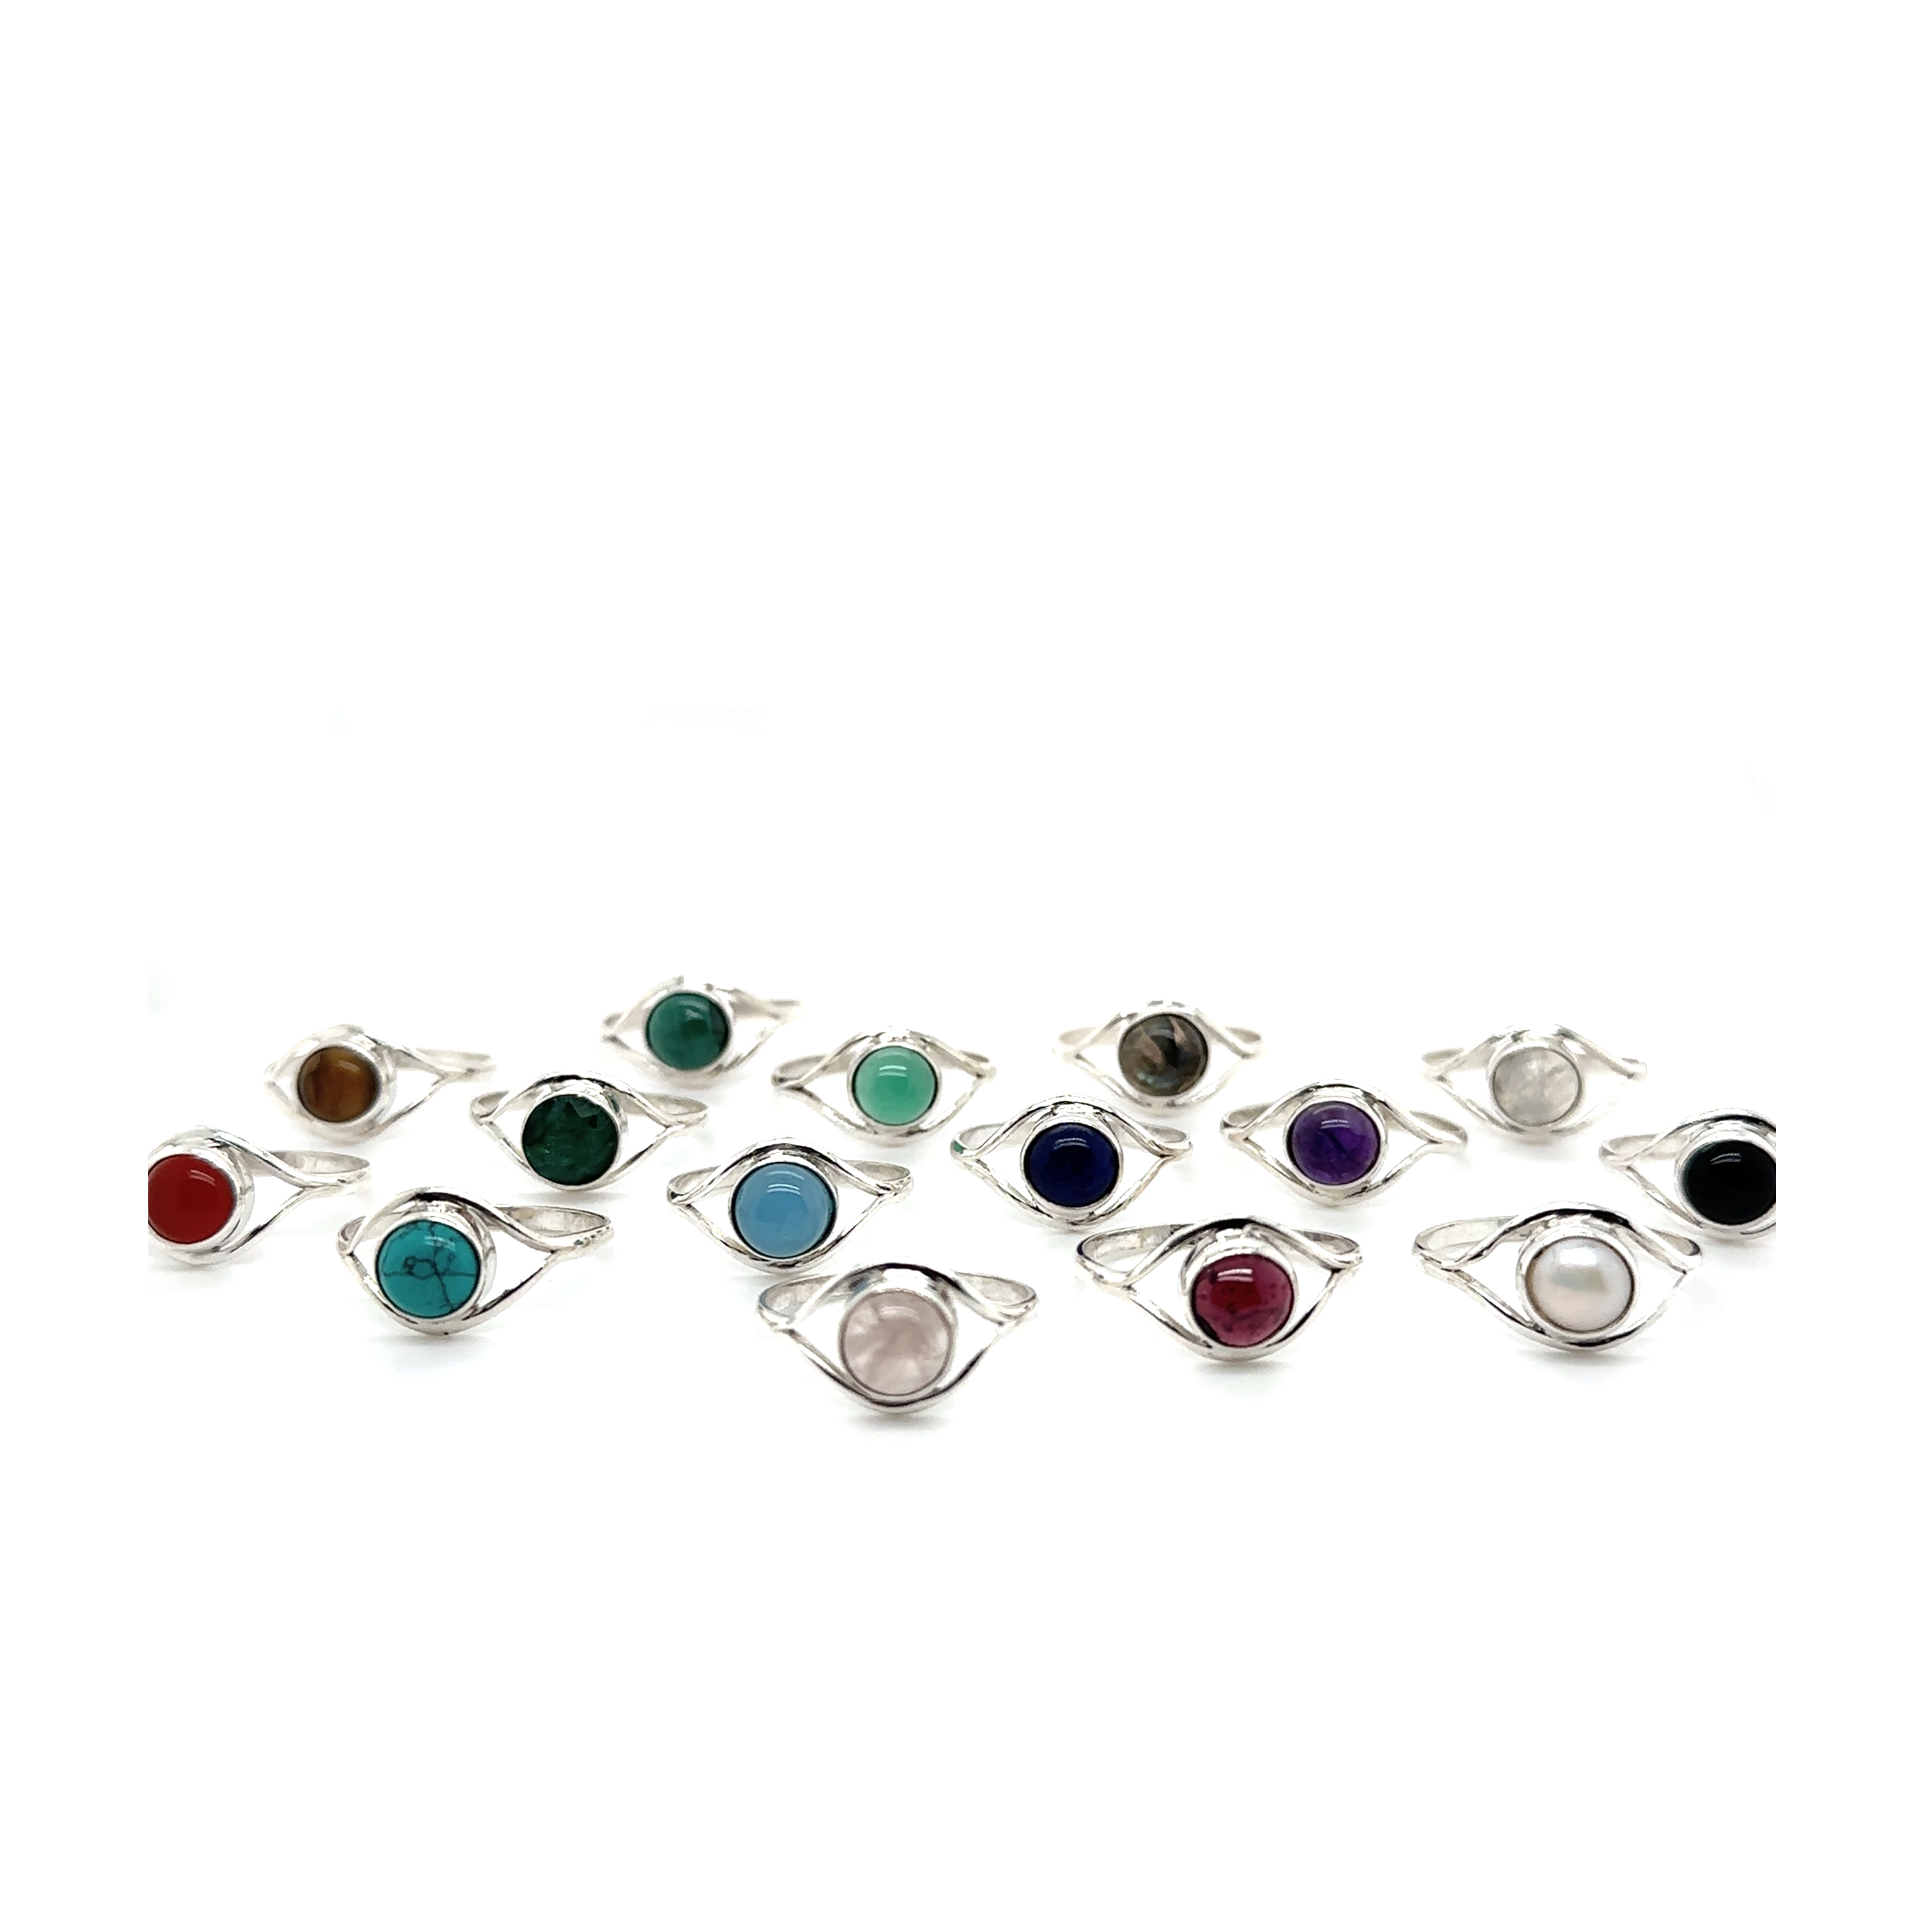 Gemstone Rings - Buy Precious Stone Rings Online | Godin London